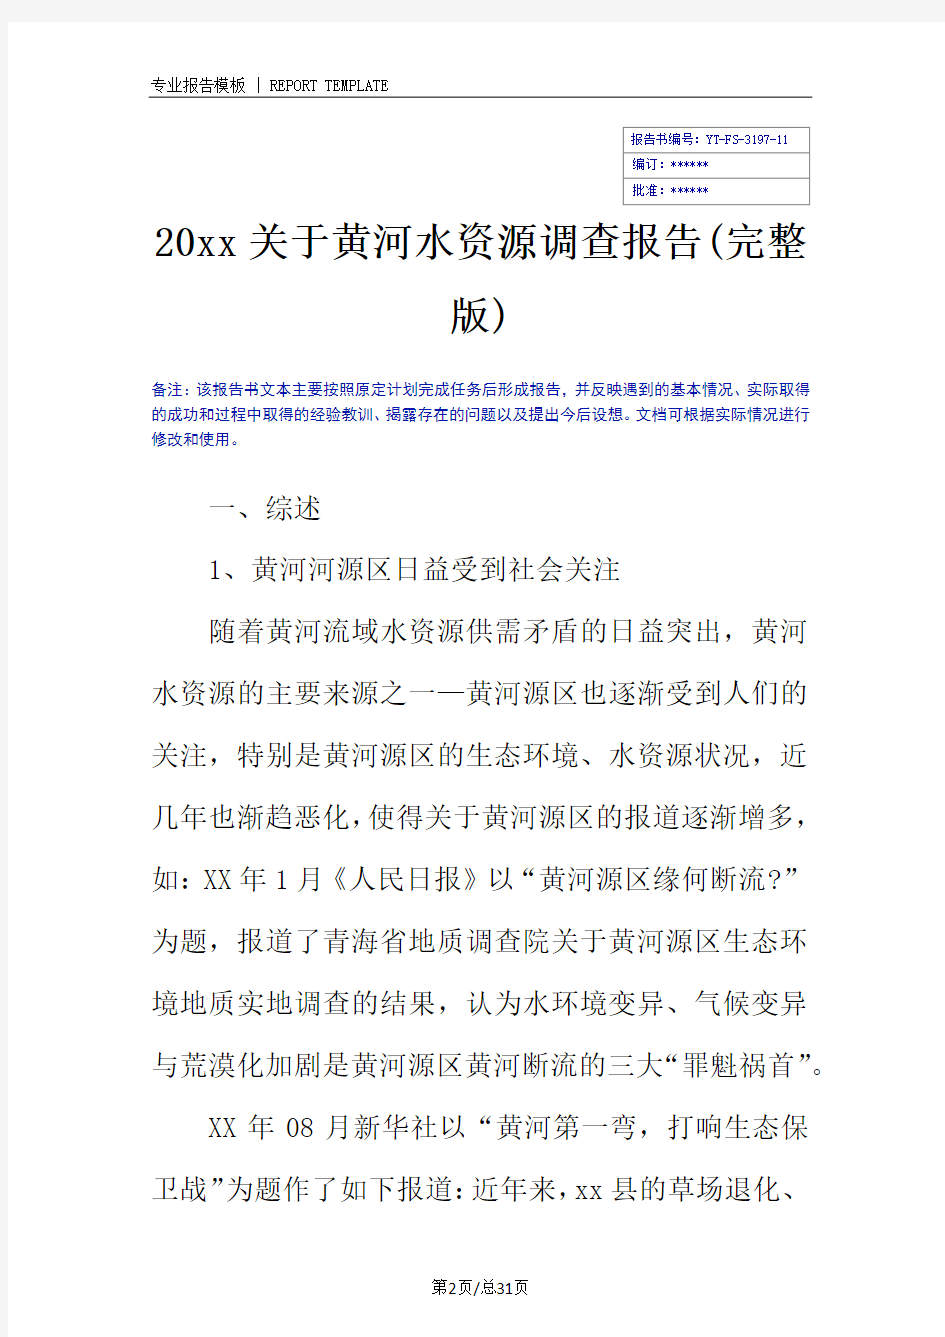 20xx关于黄河水资源调查报告(完整版)